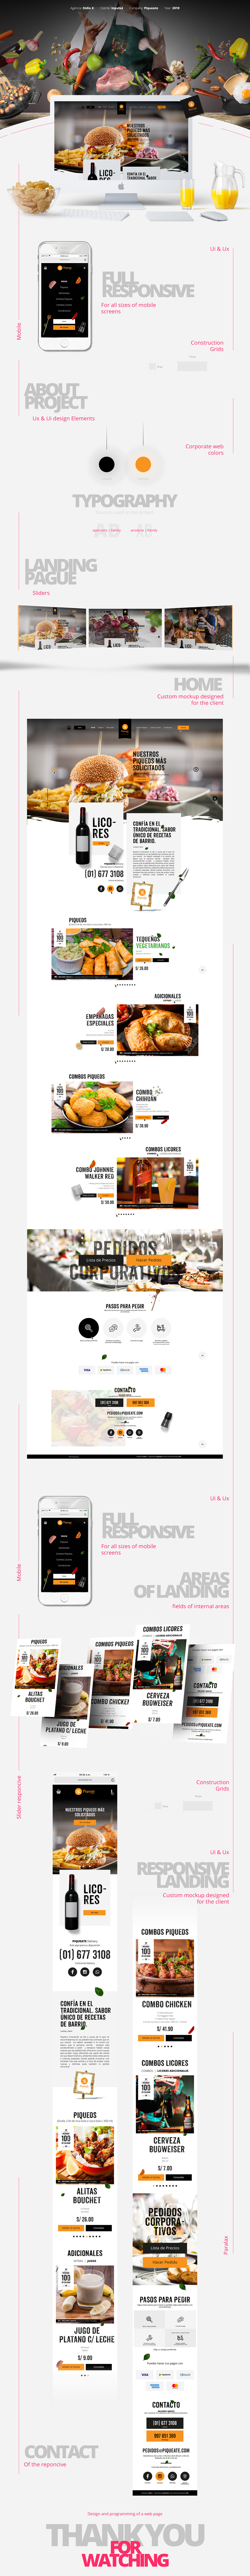 landing pagina web interfaz comida UI/UX Diseño web RESPONCIVE corporate desing Food 